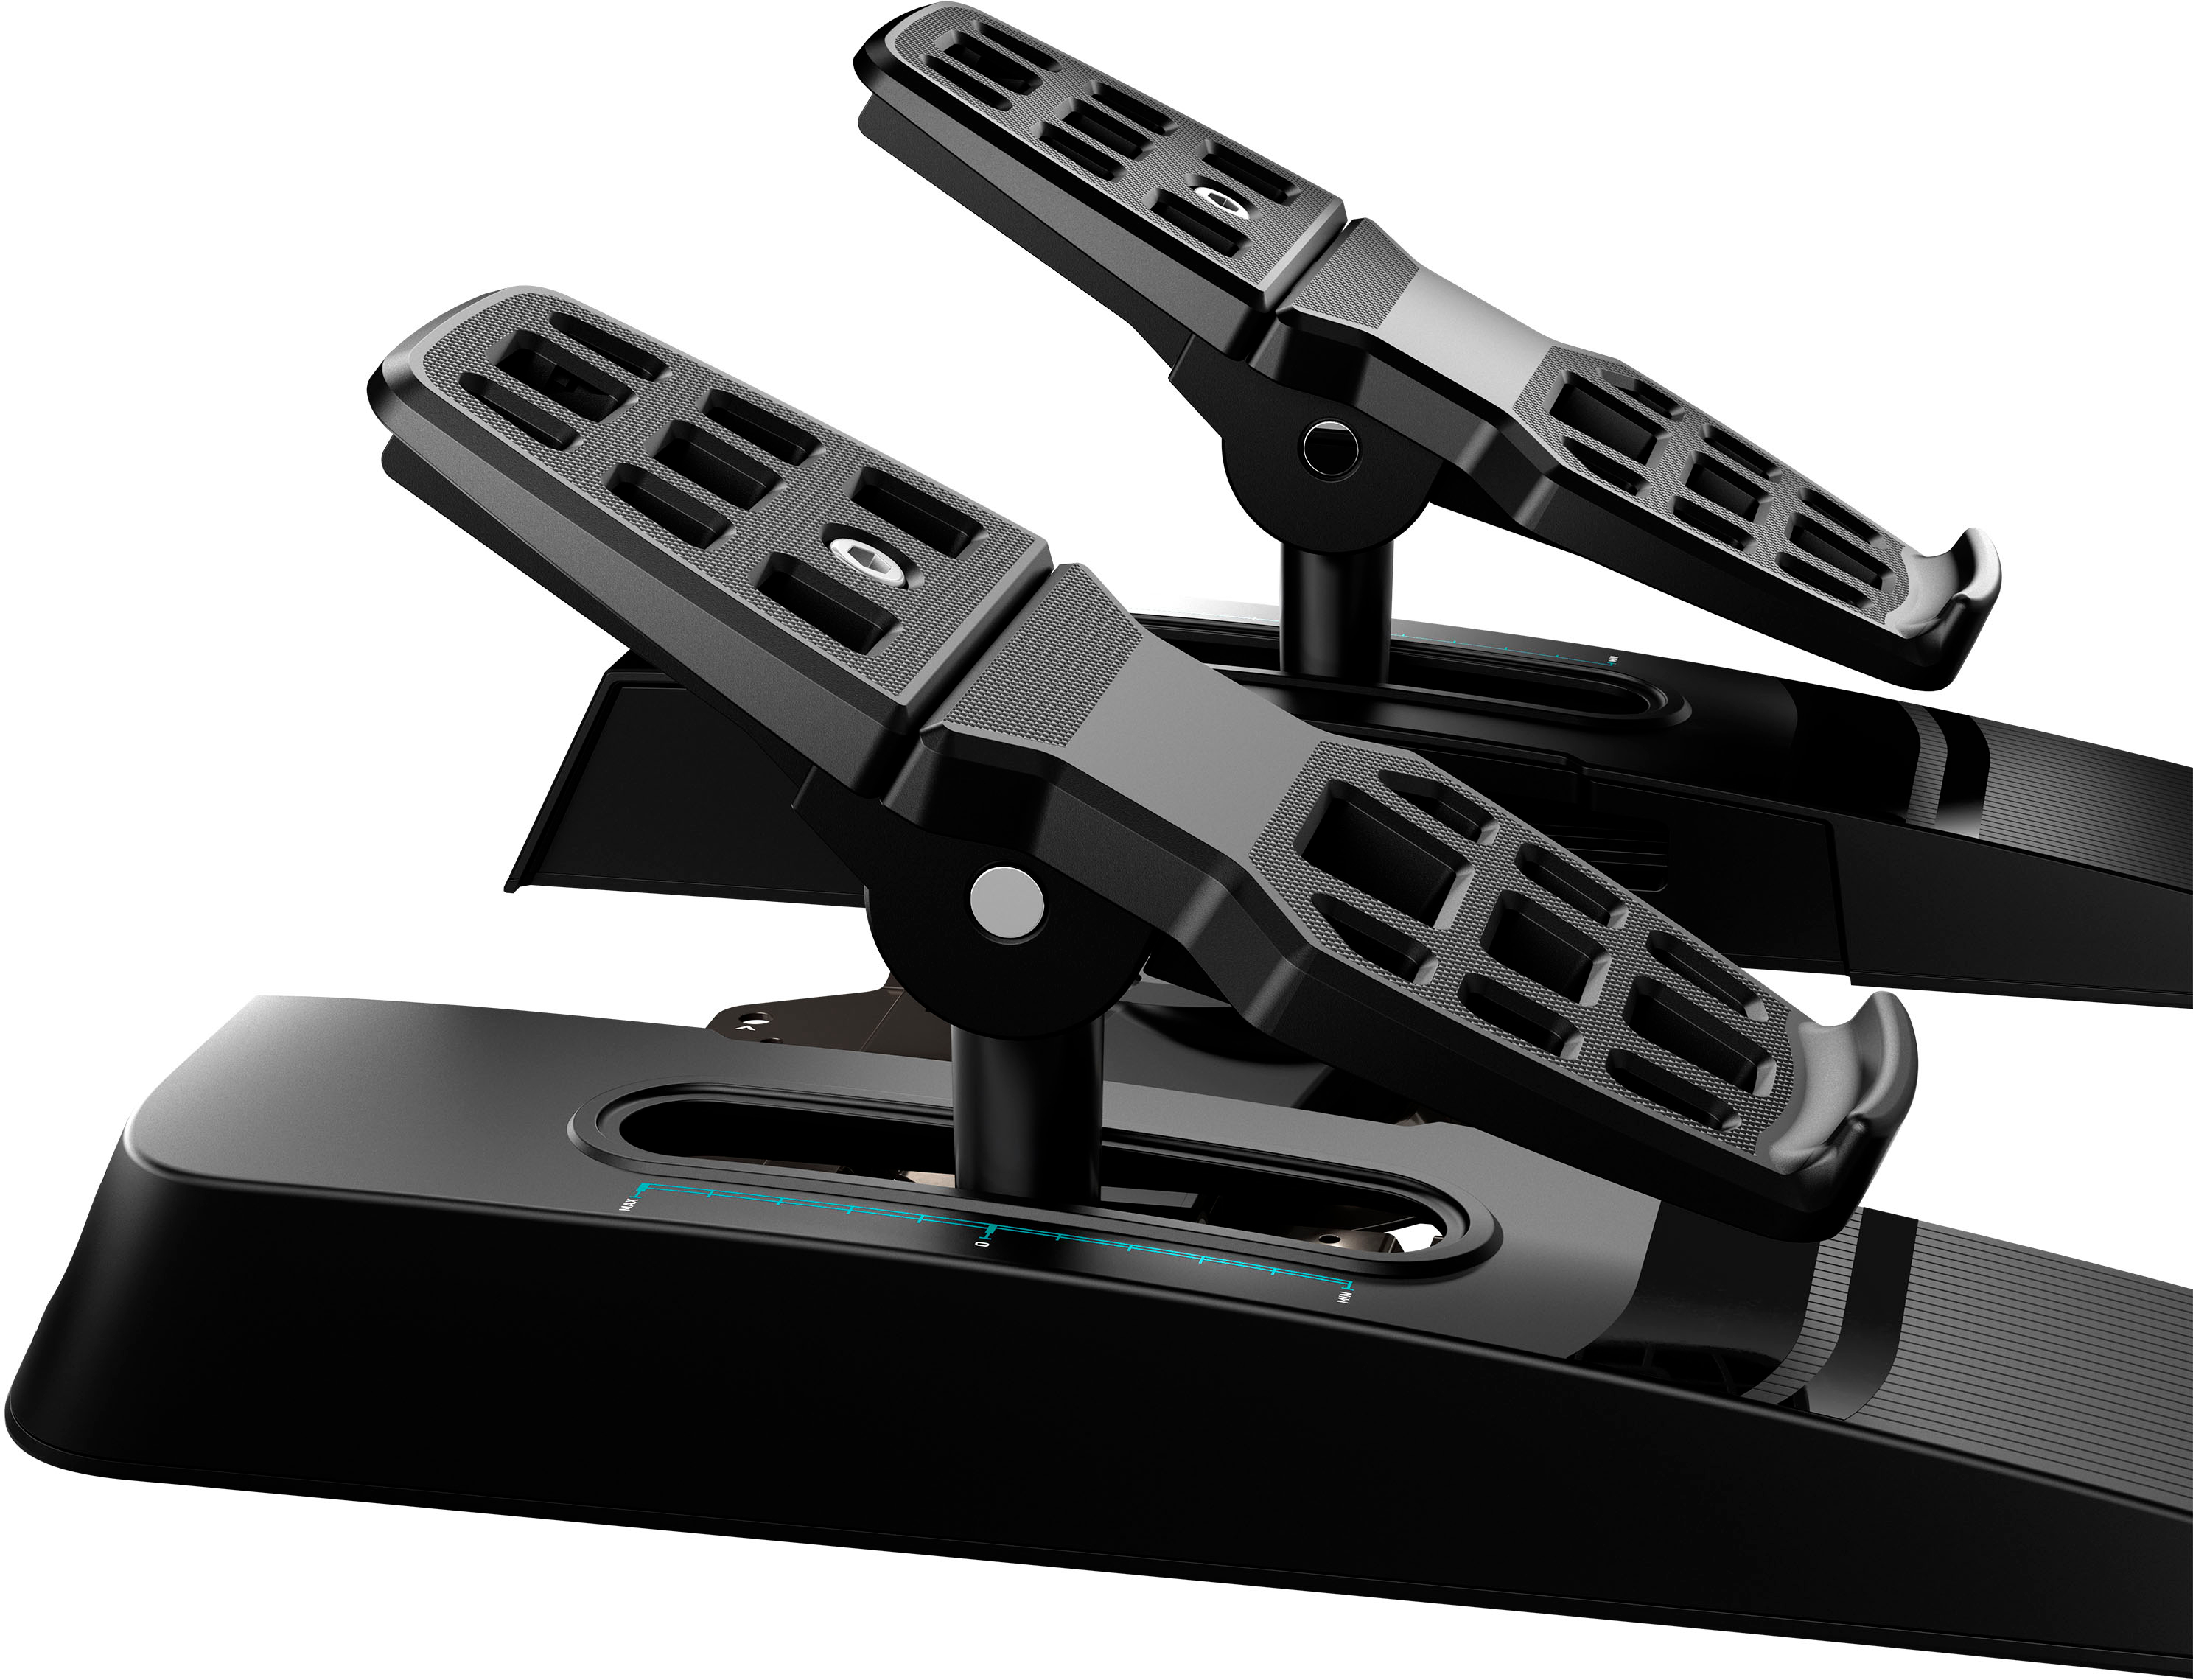 Saitek Pro Flight Combat Rudder Pedals with Toe Brakes